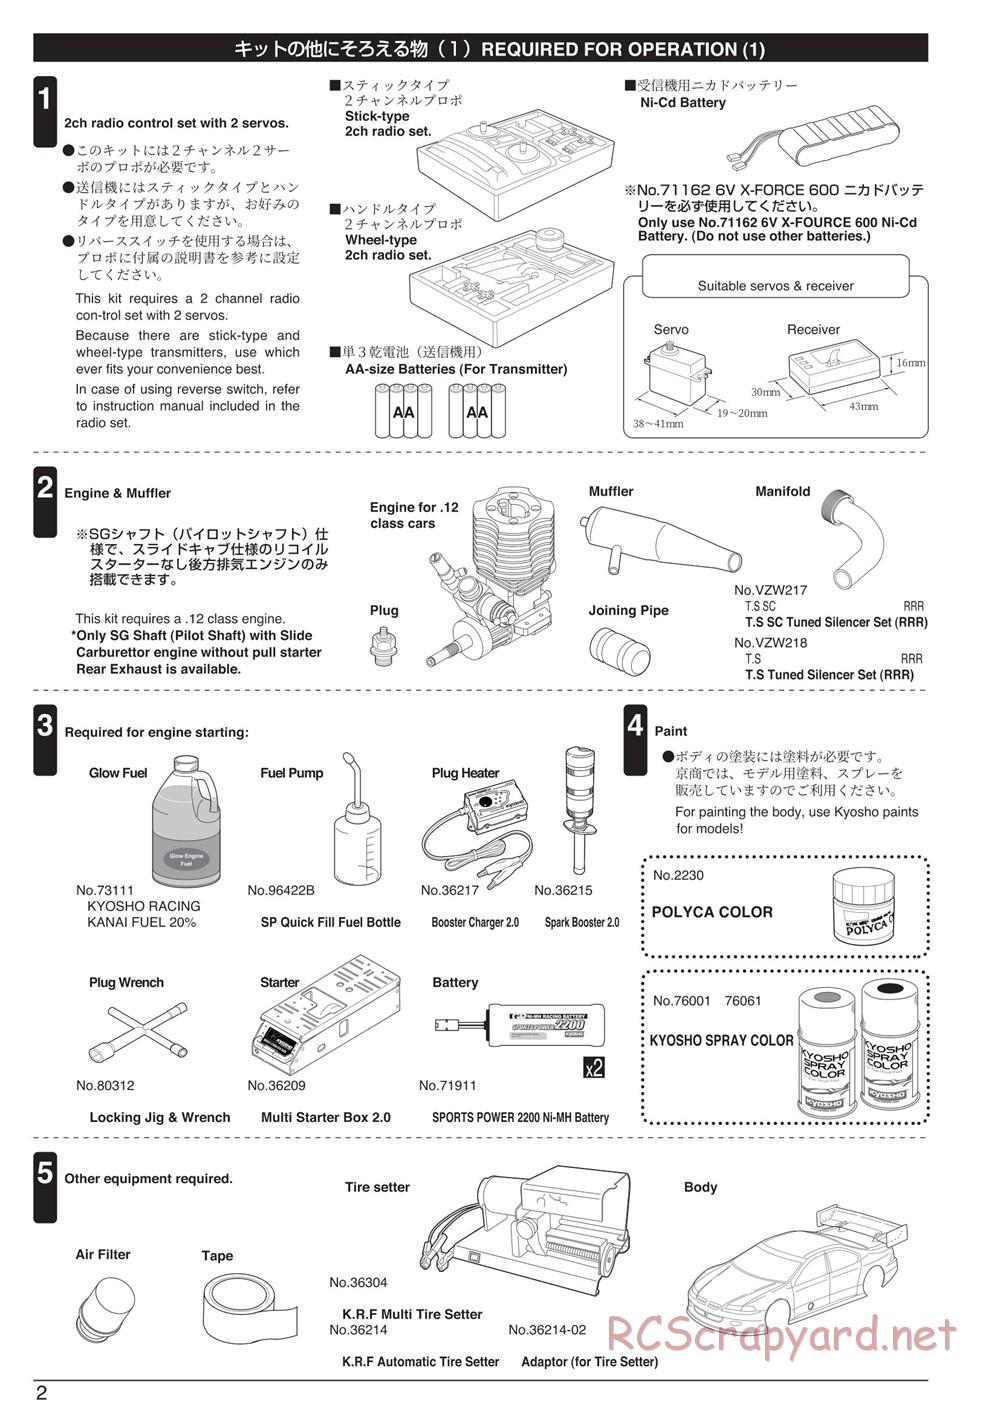 Kyosho - V-One RRR Evo - Manual - Page 2